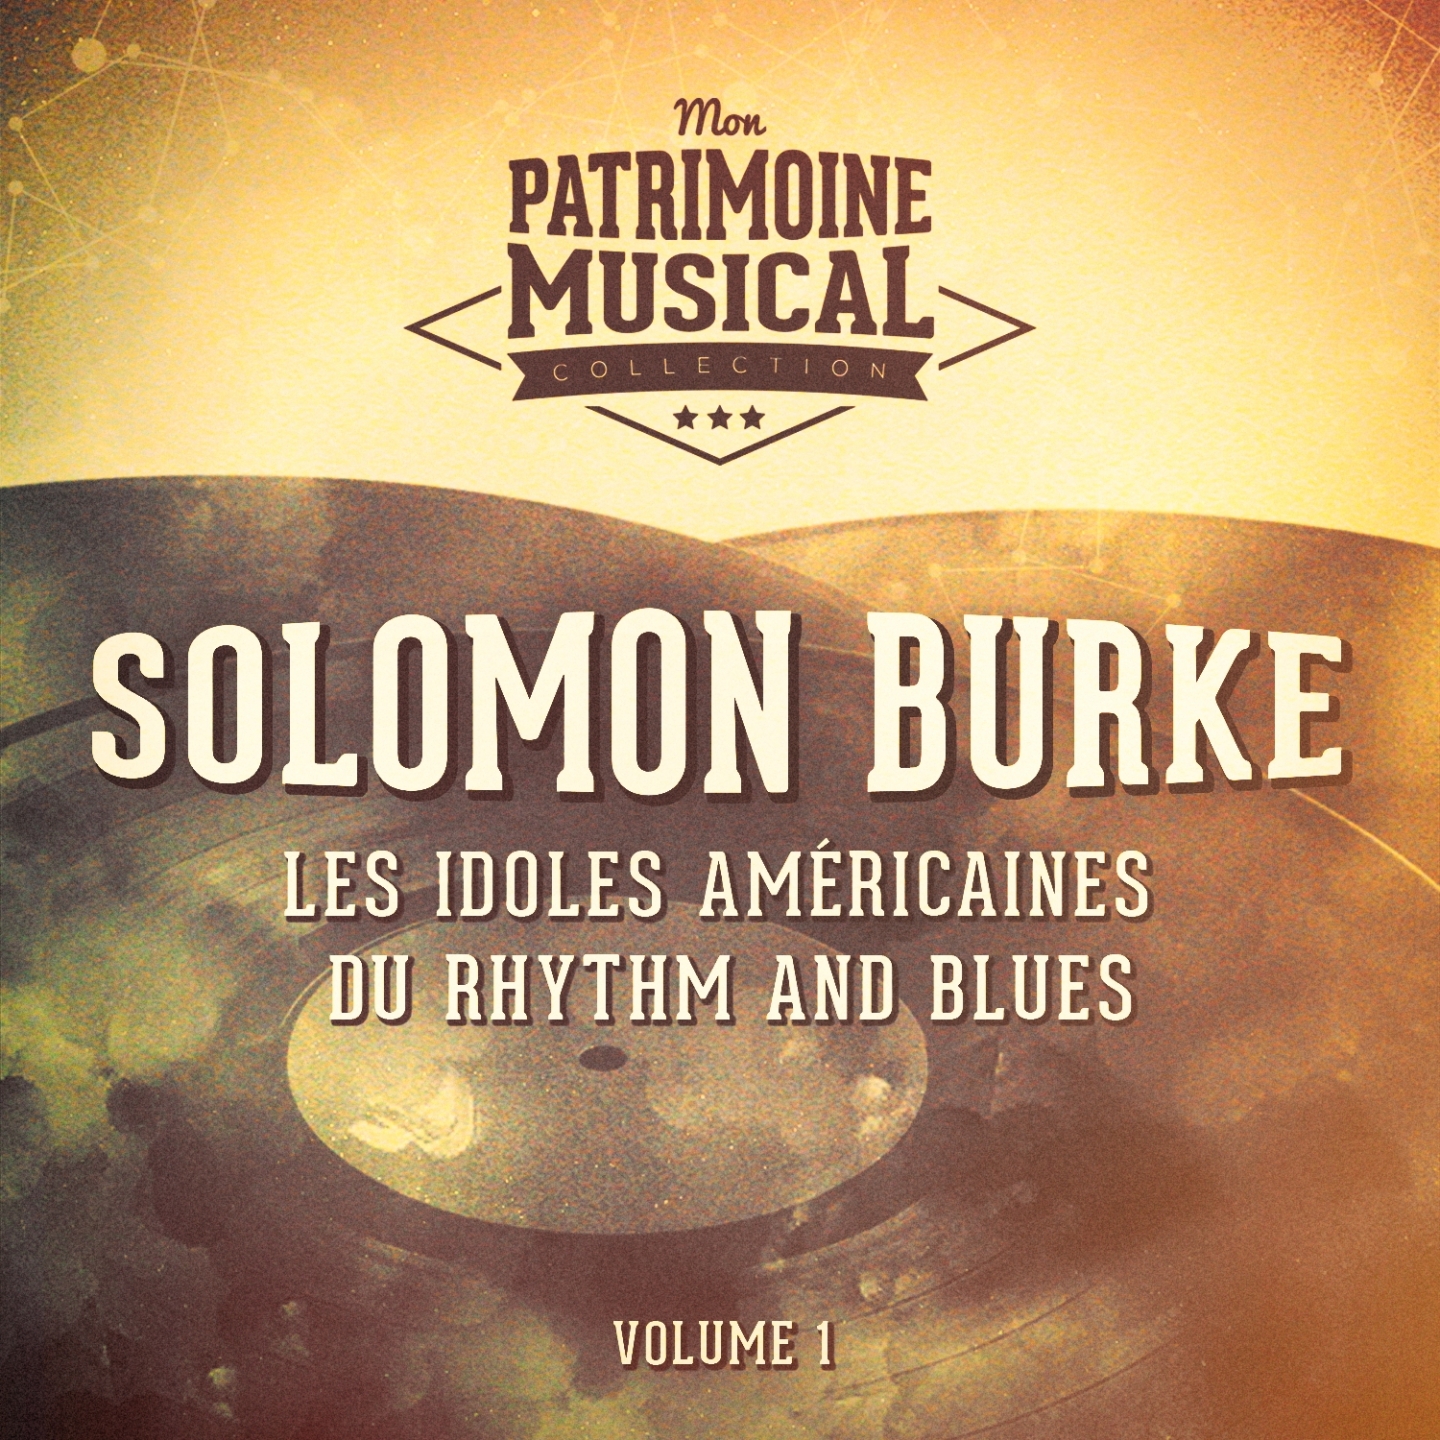 Les Idoles Ame ricaines Du Rhythm and Blues: Solomon Burke, Vol. 1